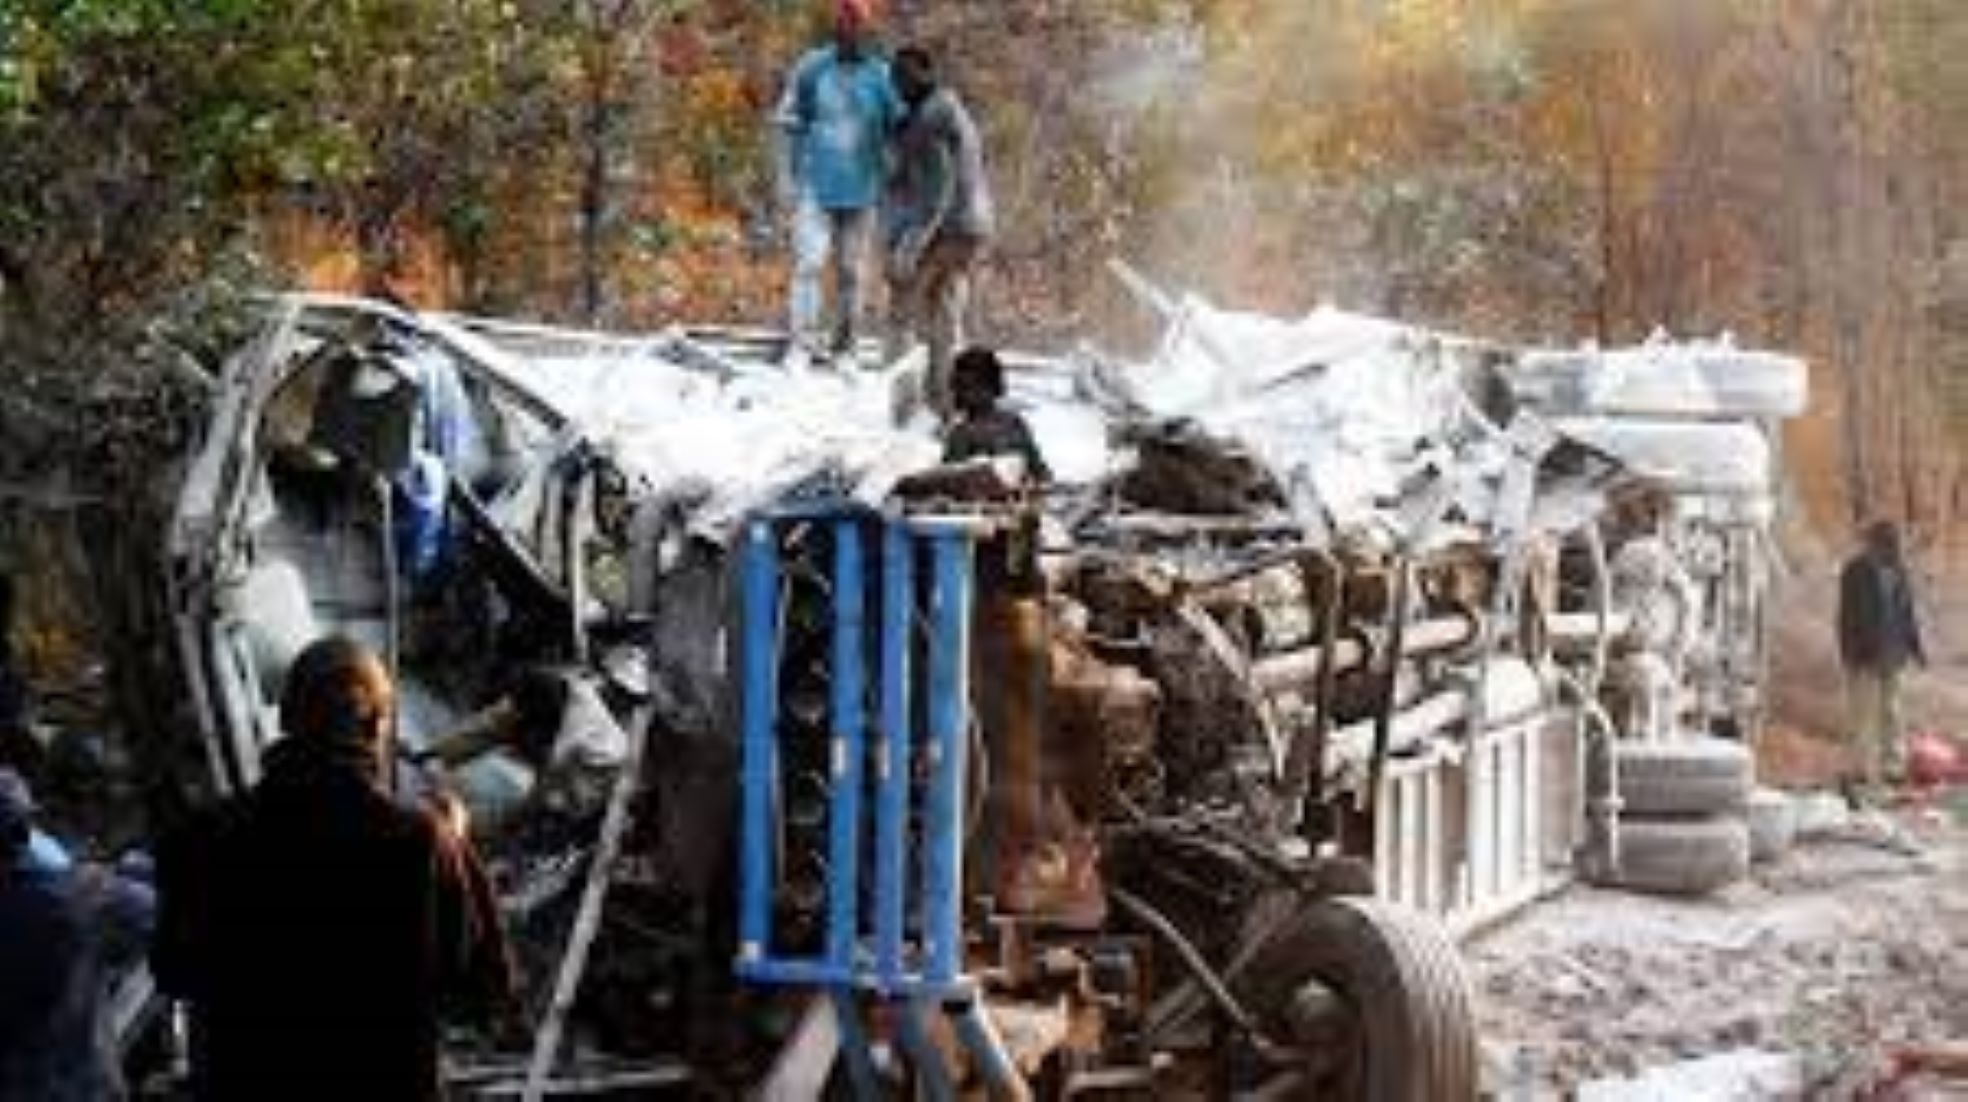 24 Killed, 12 Injured In Zambia Road Crash